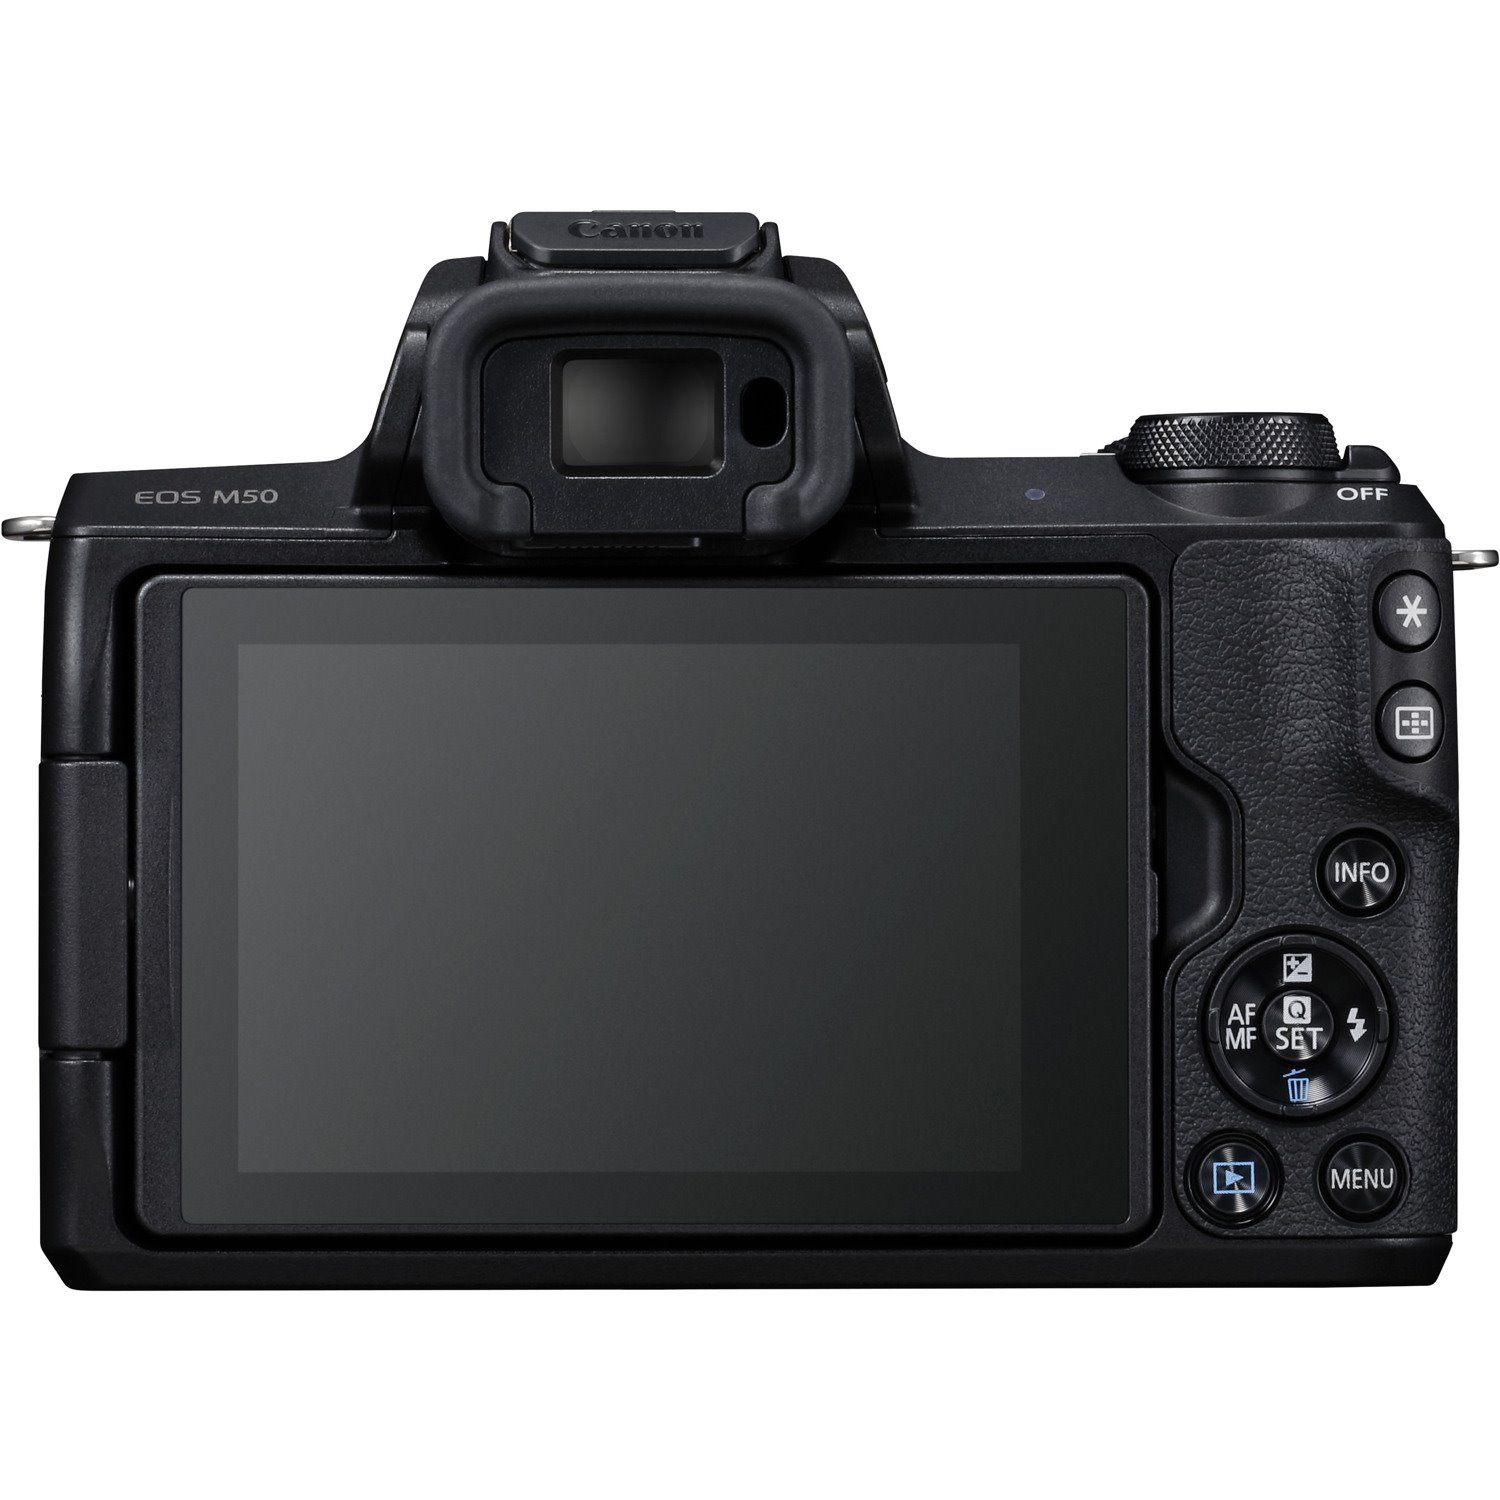 Canon EOS M50 24.1 Megapixel Mirrorless Camera with Lens - 0.59" - 1.77" - Black